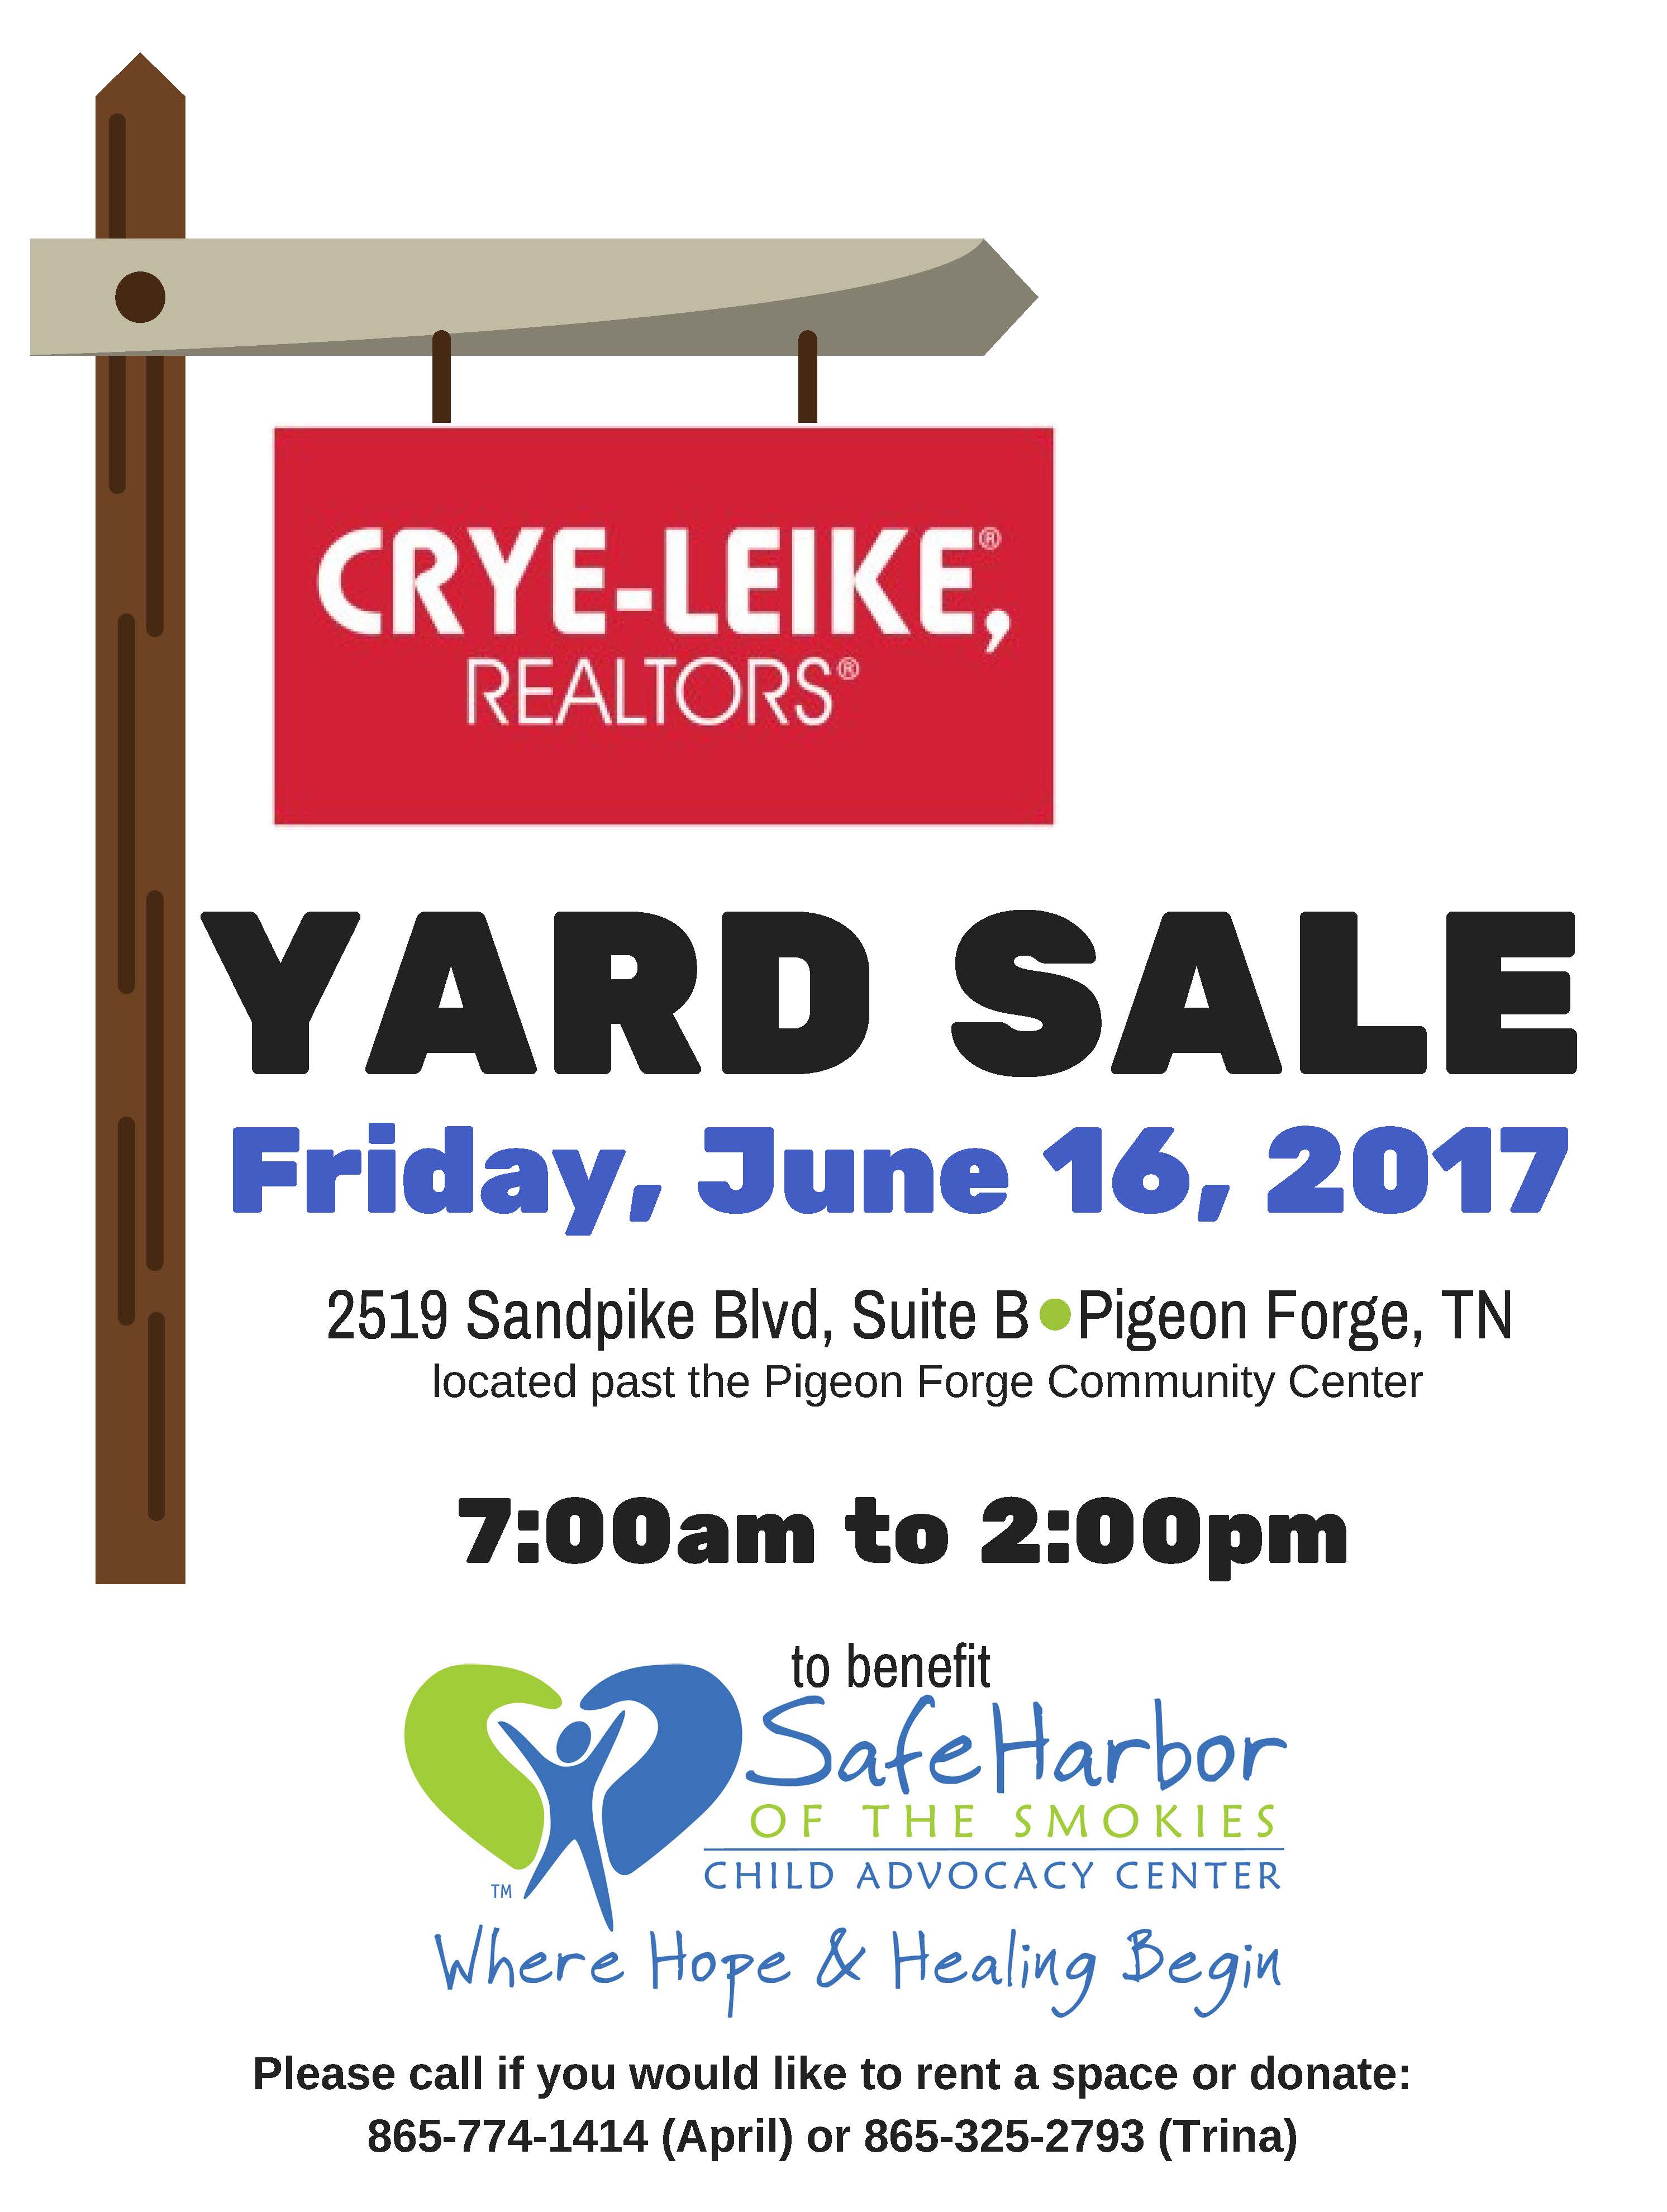 Crye-Leike Realtors Yard Sale